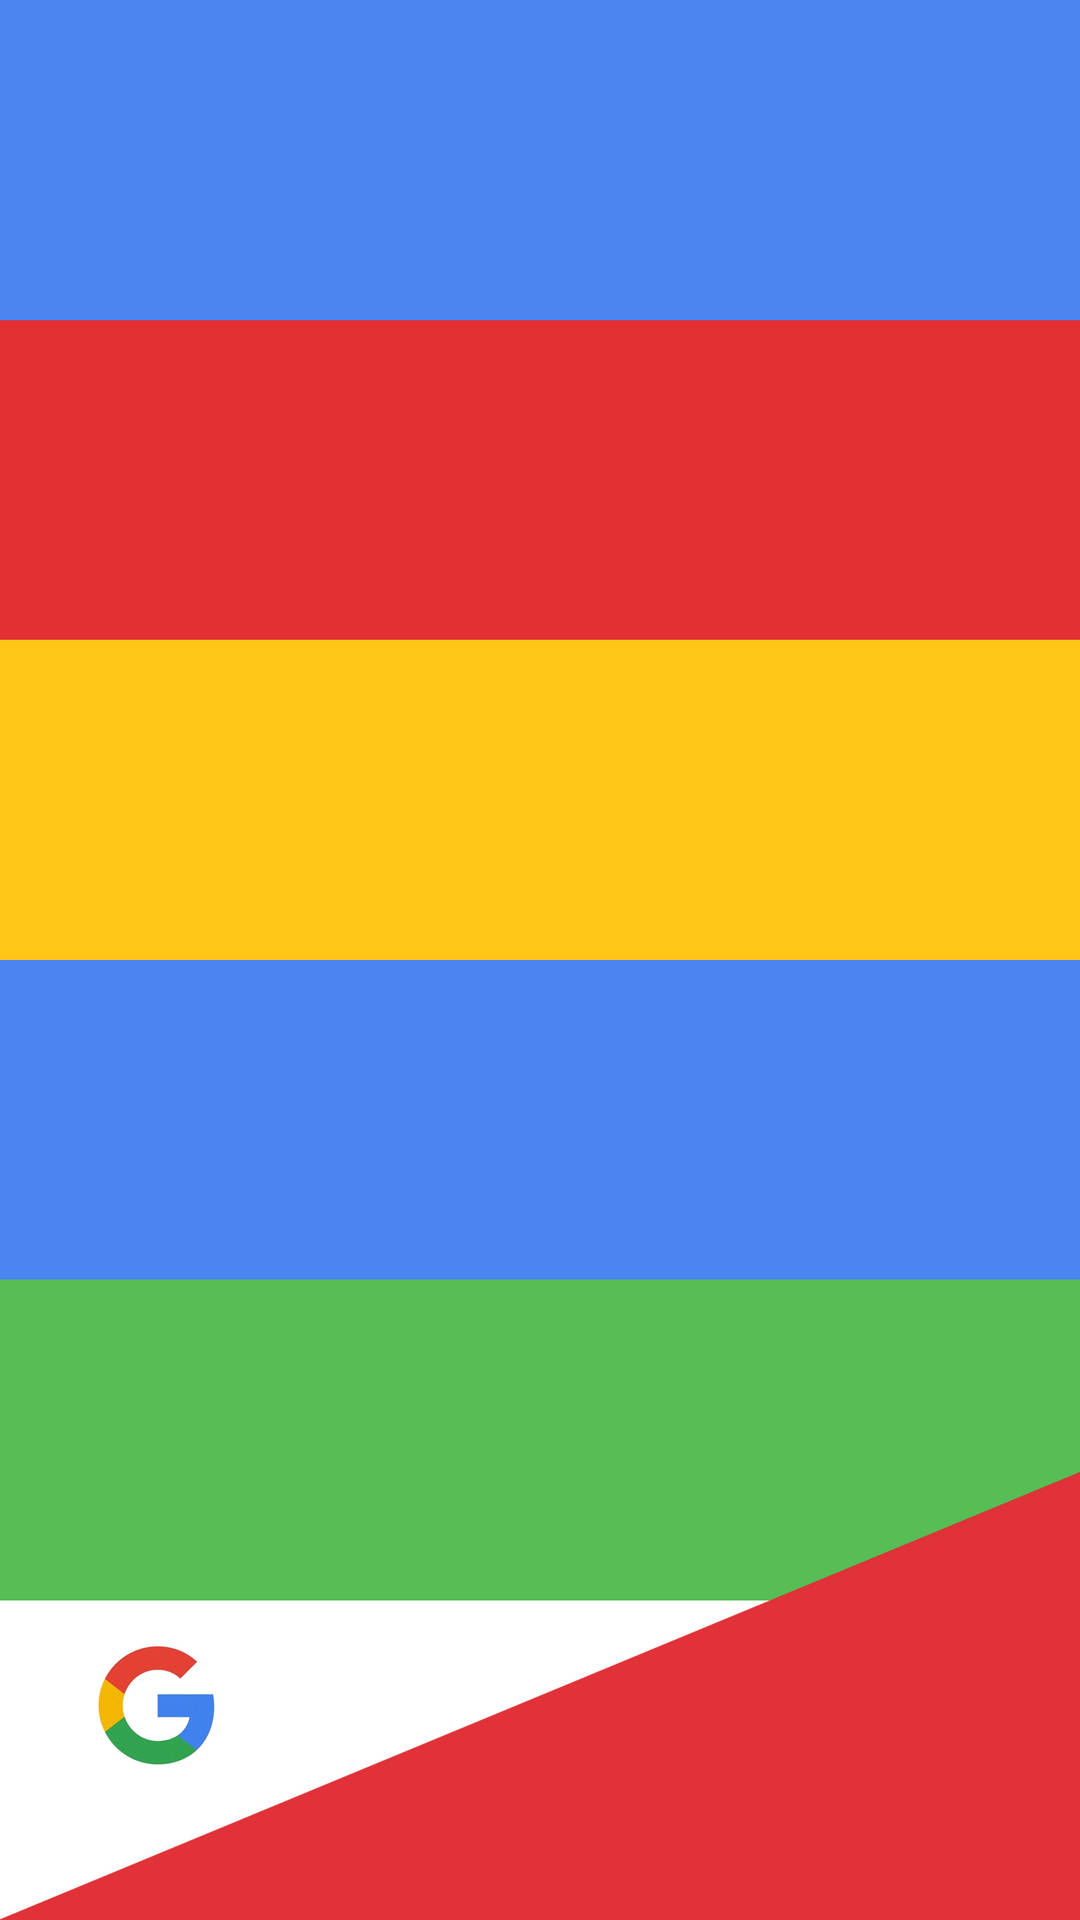 Google Colors Horizontal Stripes Wallpaper